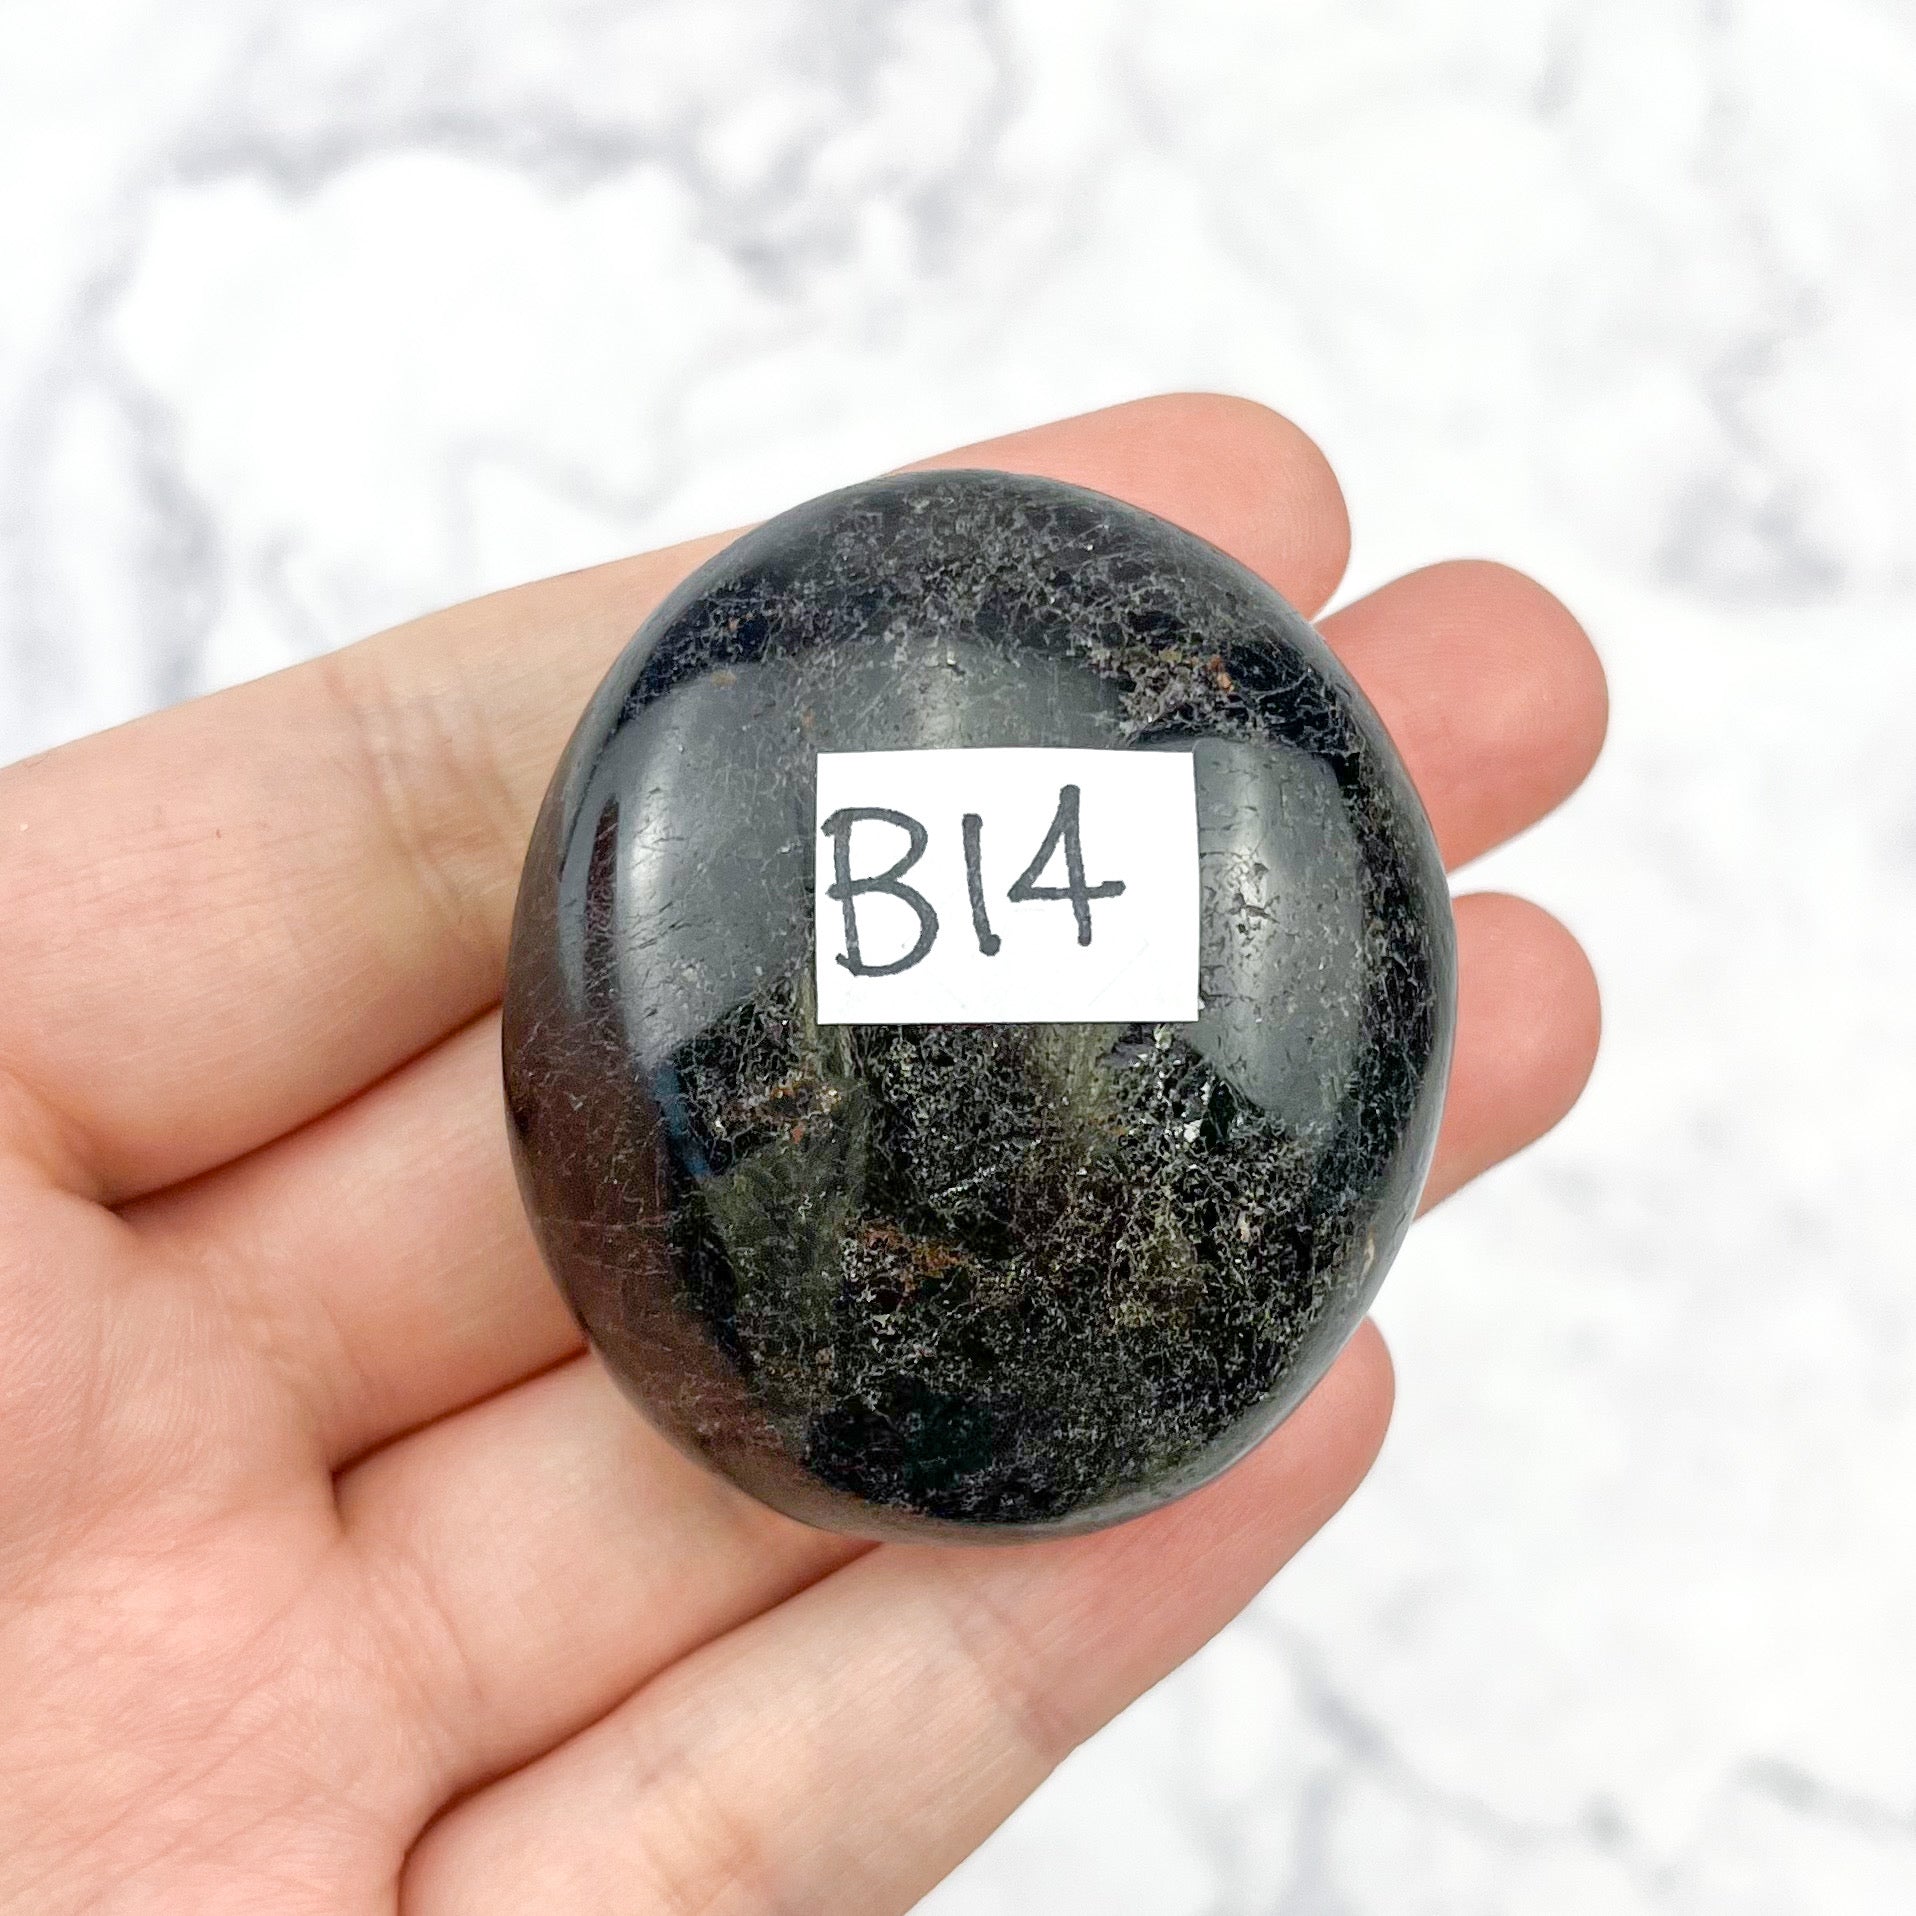 1.75 Inch Black Tourmaline Palmstone B14